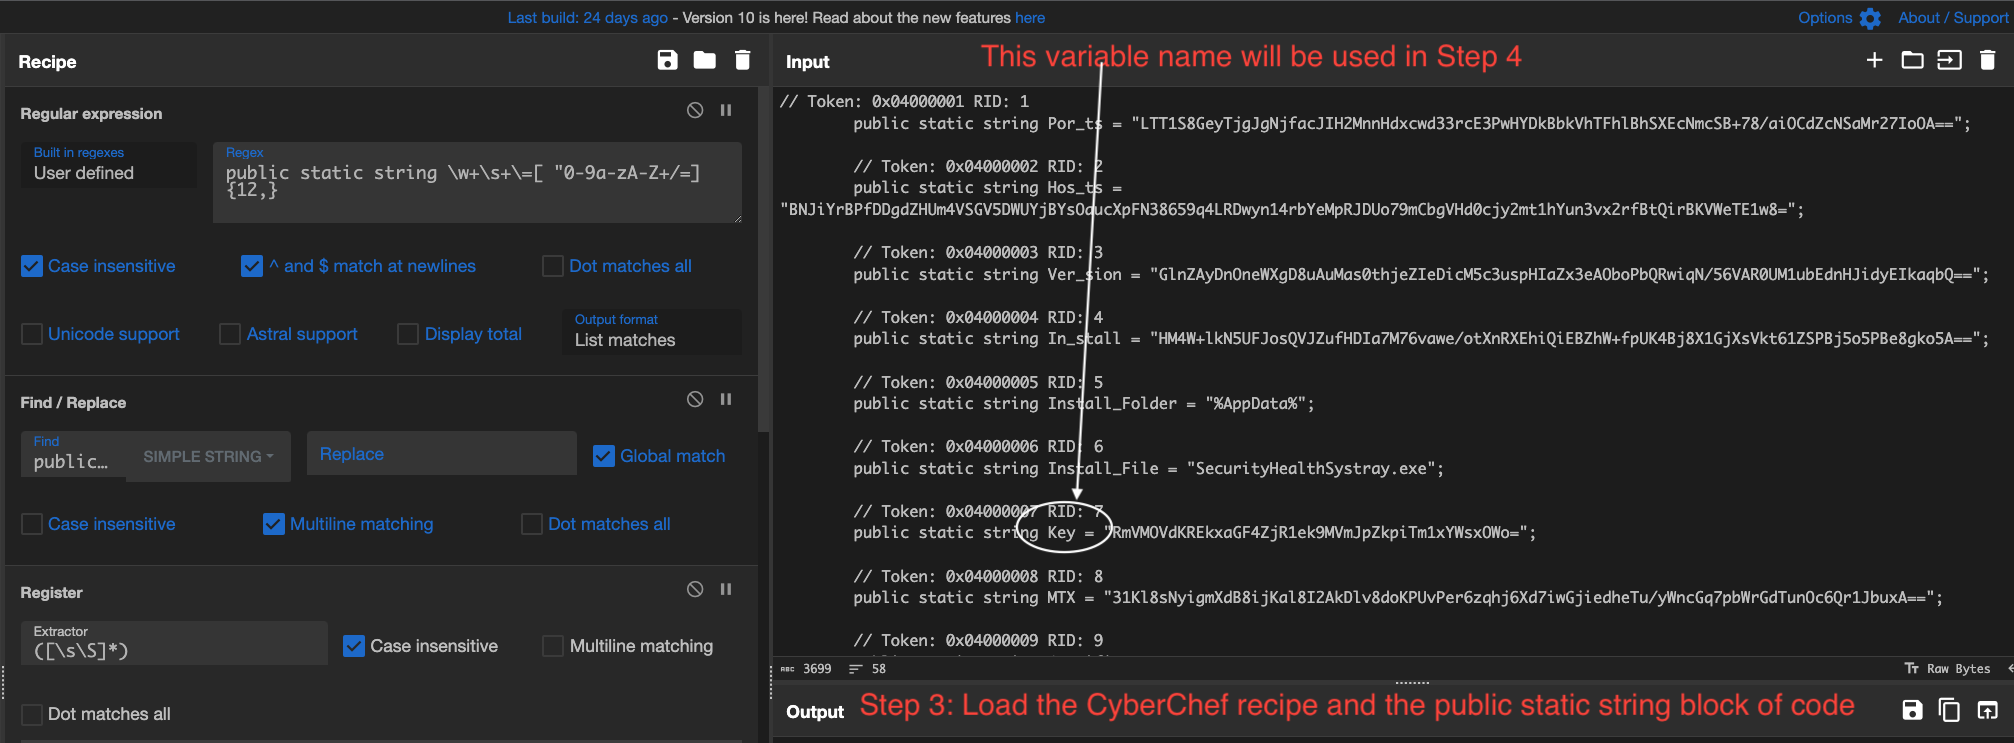 AsyncRAT CyberChef recipe Load Step 3